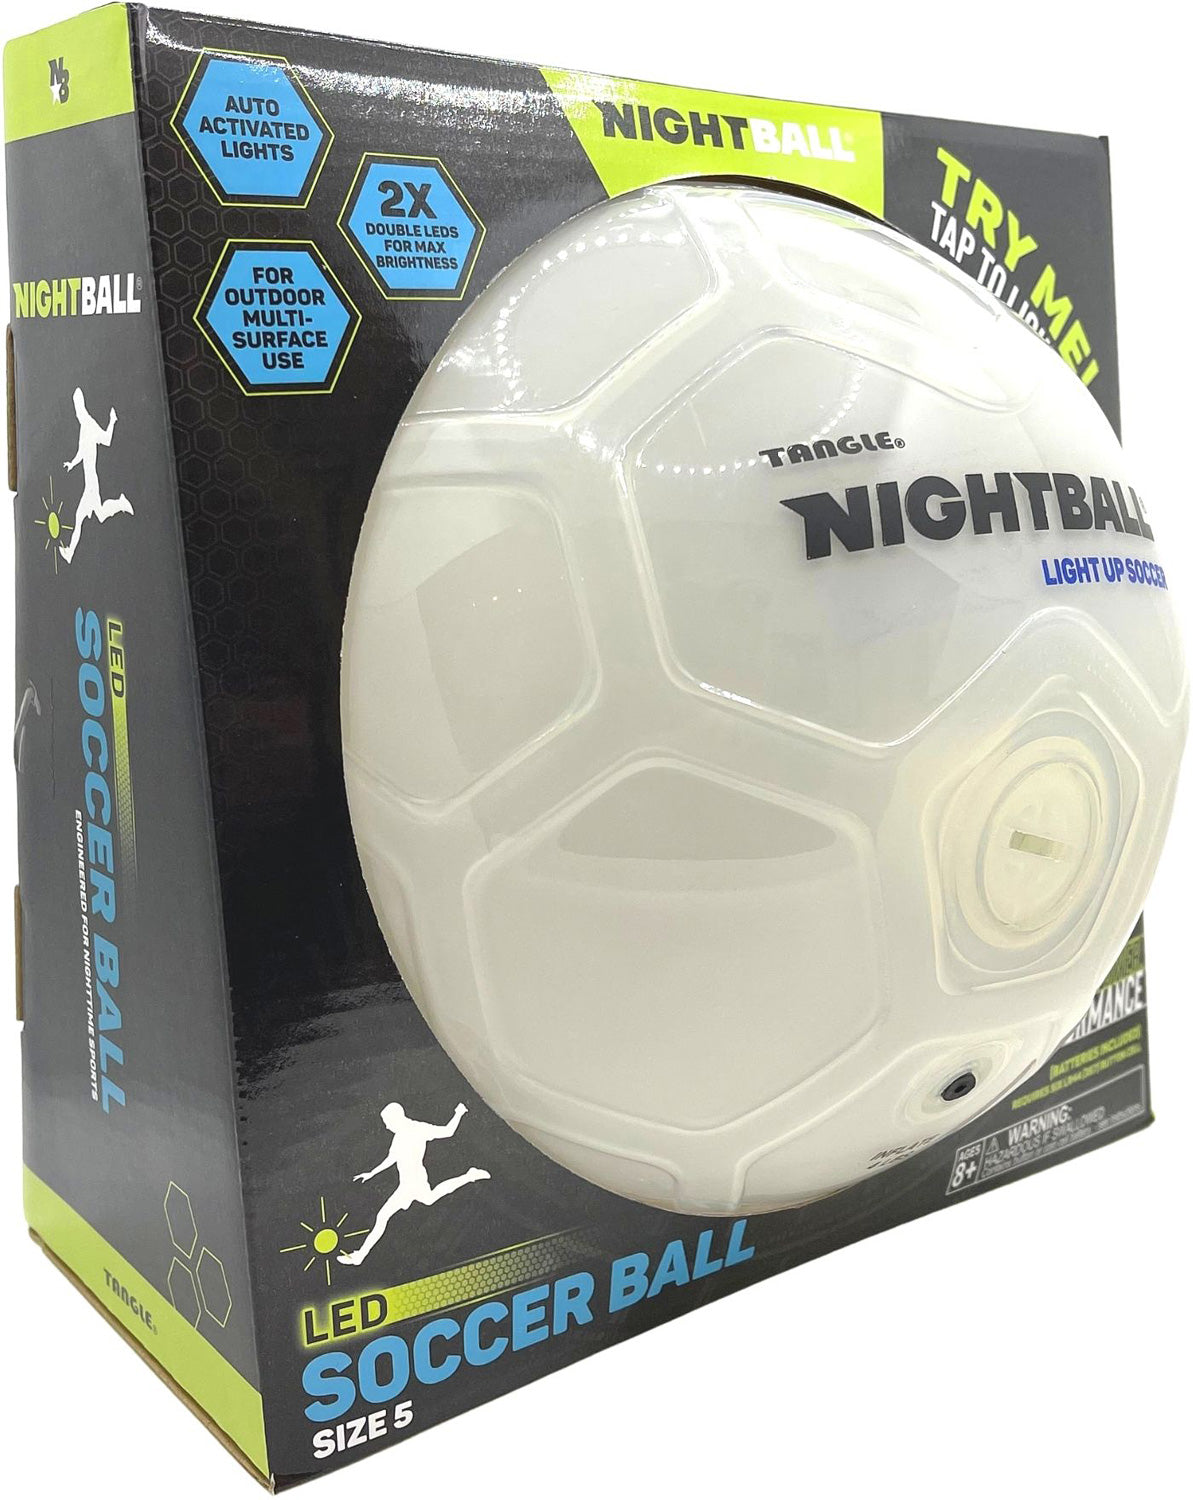 Tangle NightBall Light Up Football Green Size 5